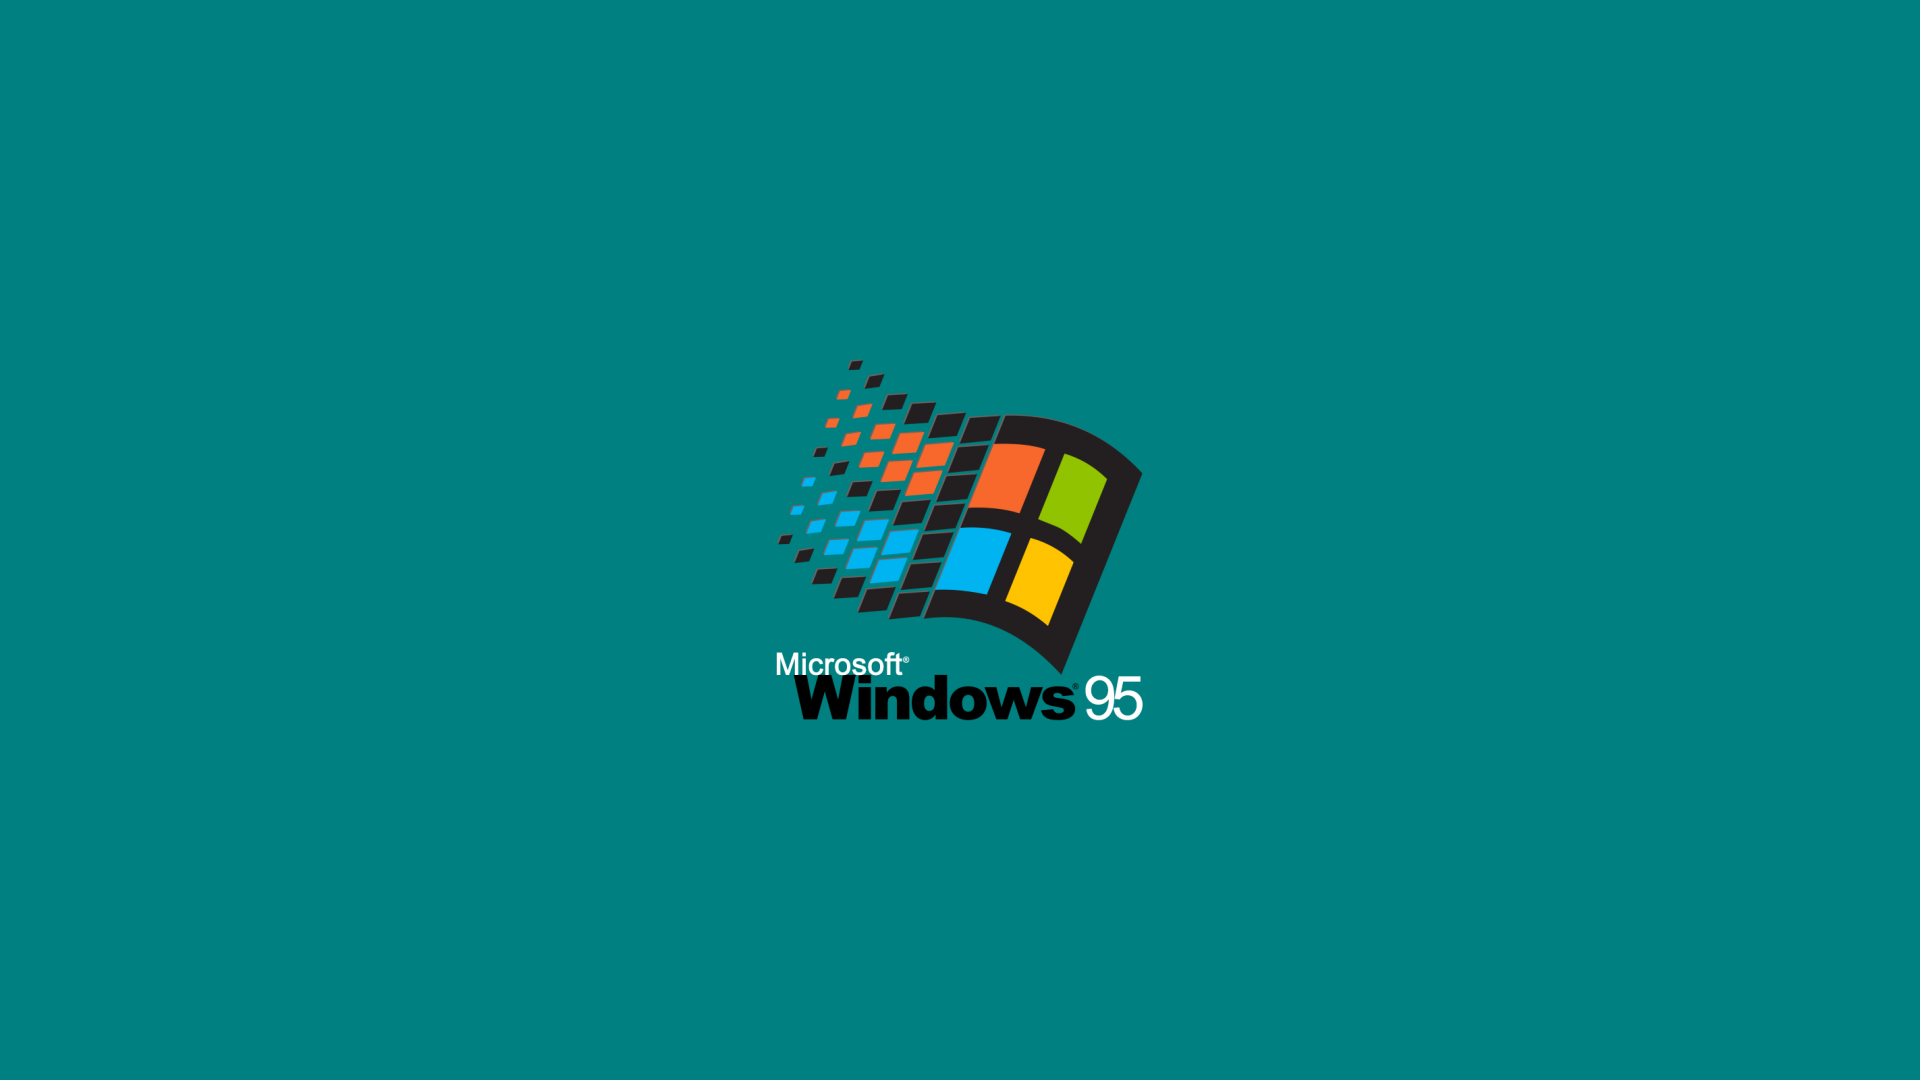 Windows-95-Microsoft-Windows-logo-digital-art-1396527-wallhere.com.png